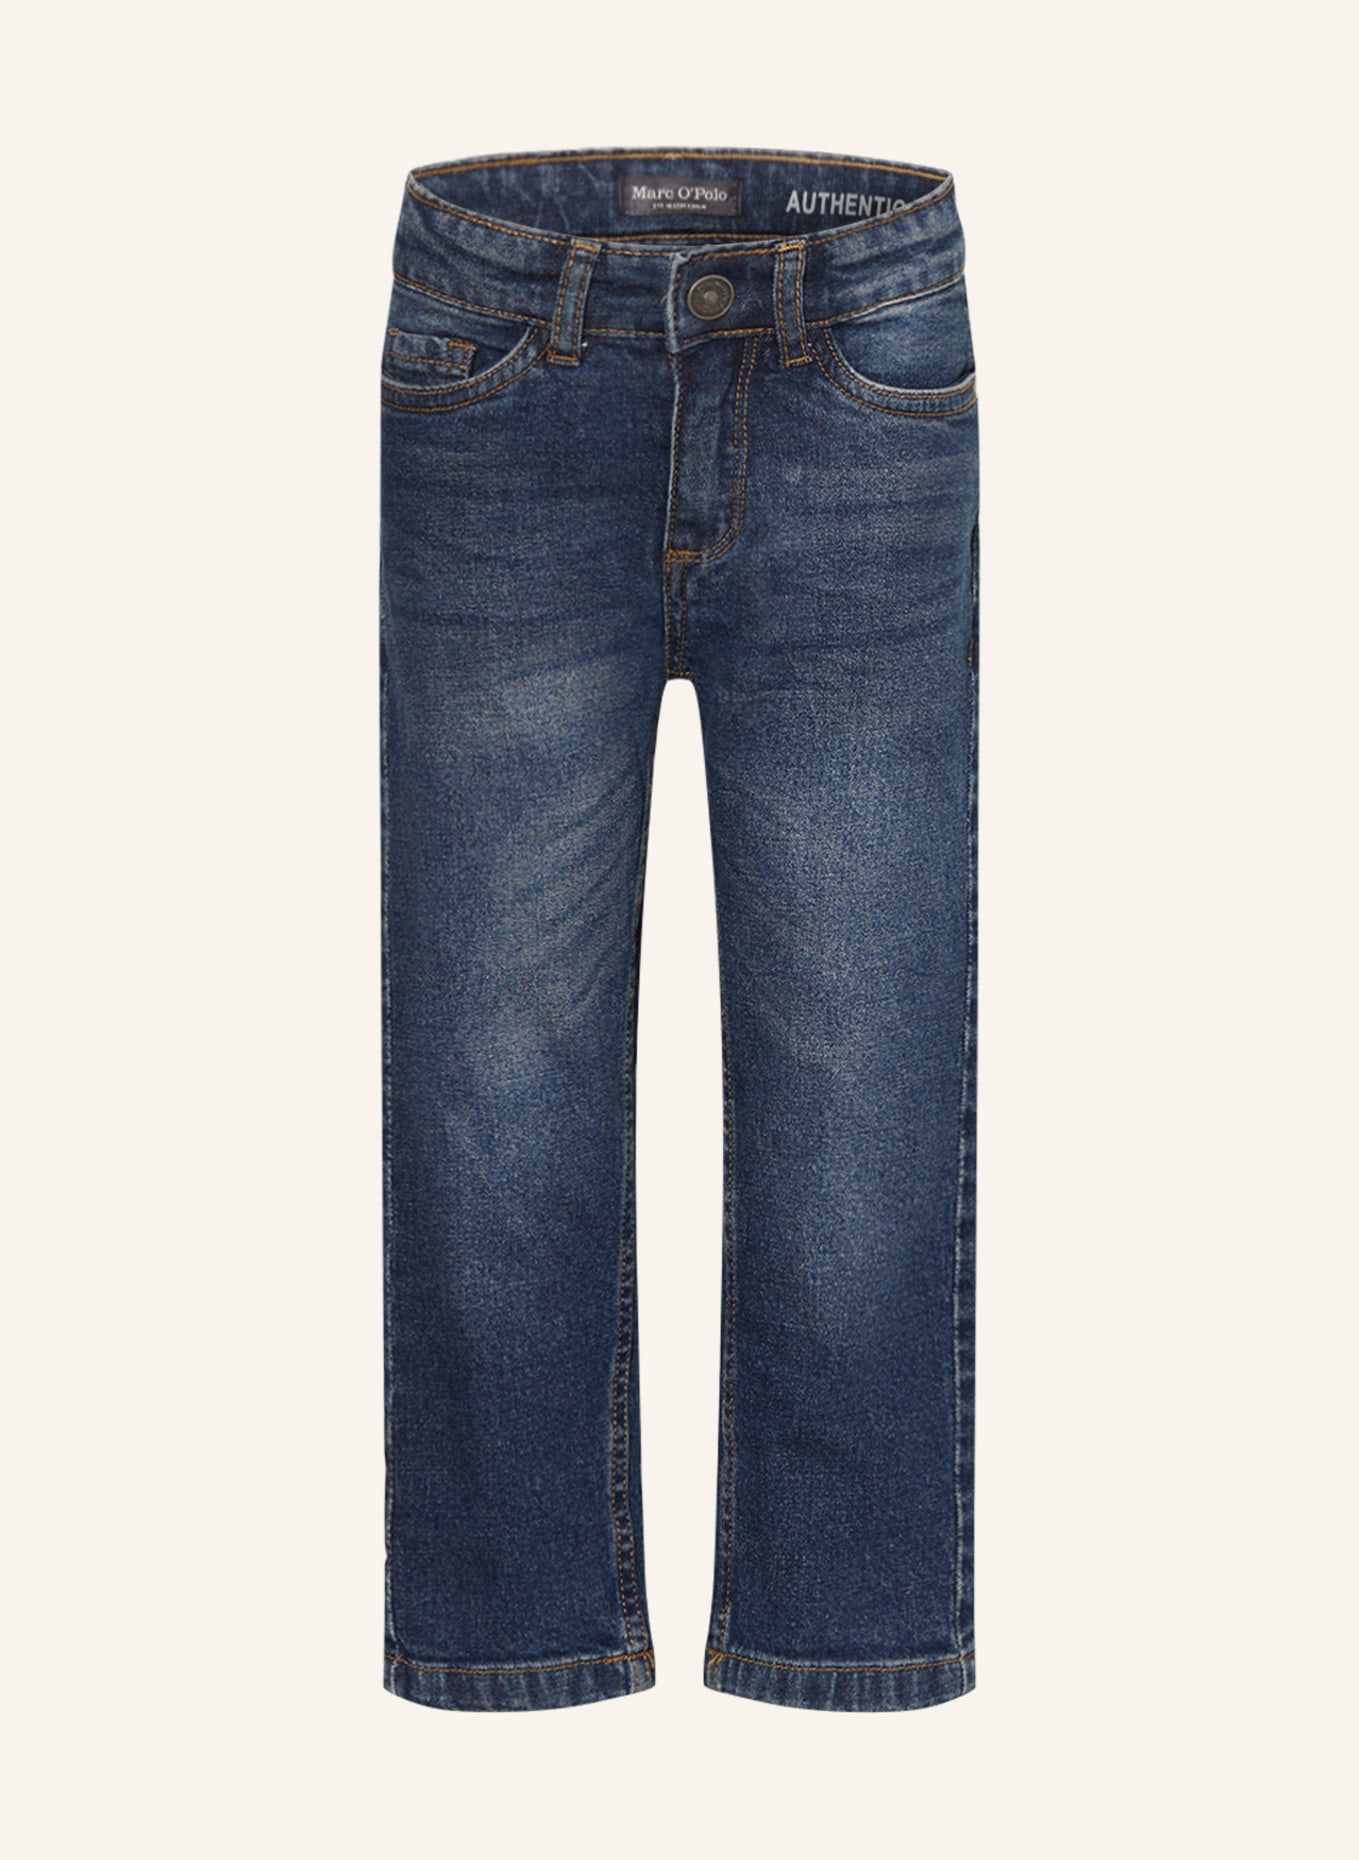 Marc O'Polo Jeans, Farbe: 606 DARK BLUE DENIM (Bild 1)